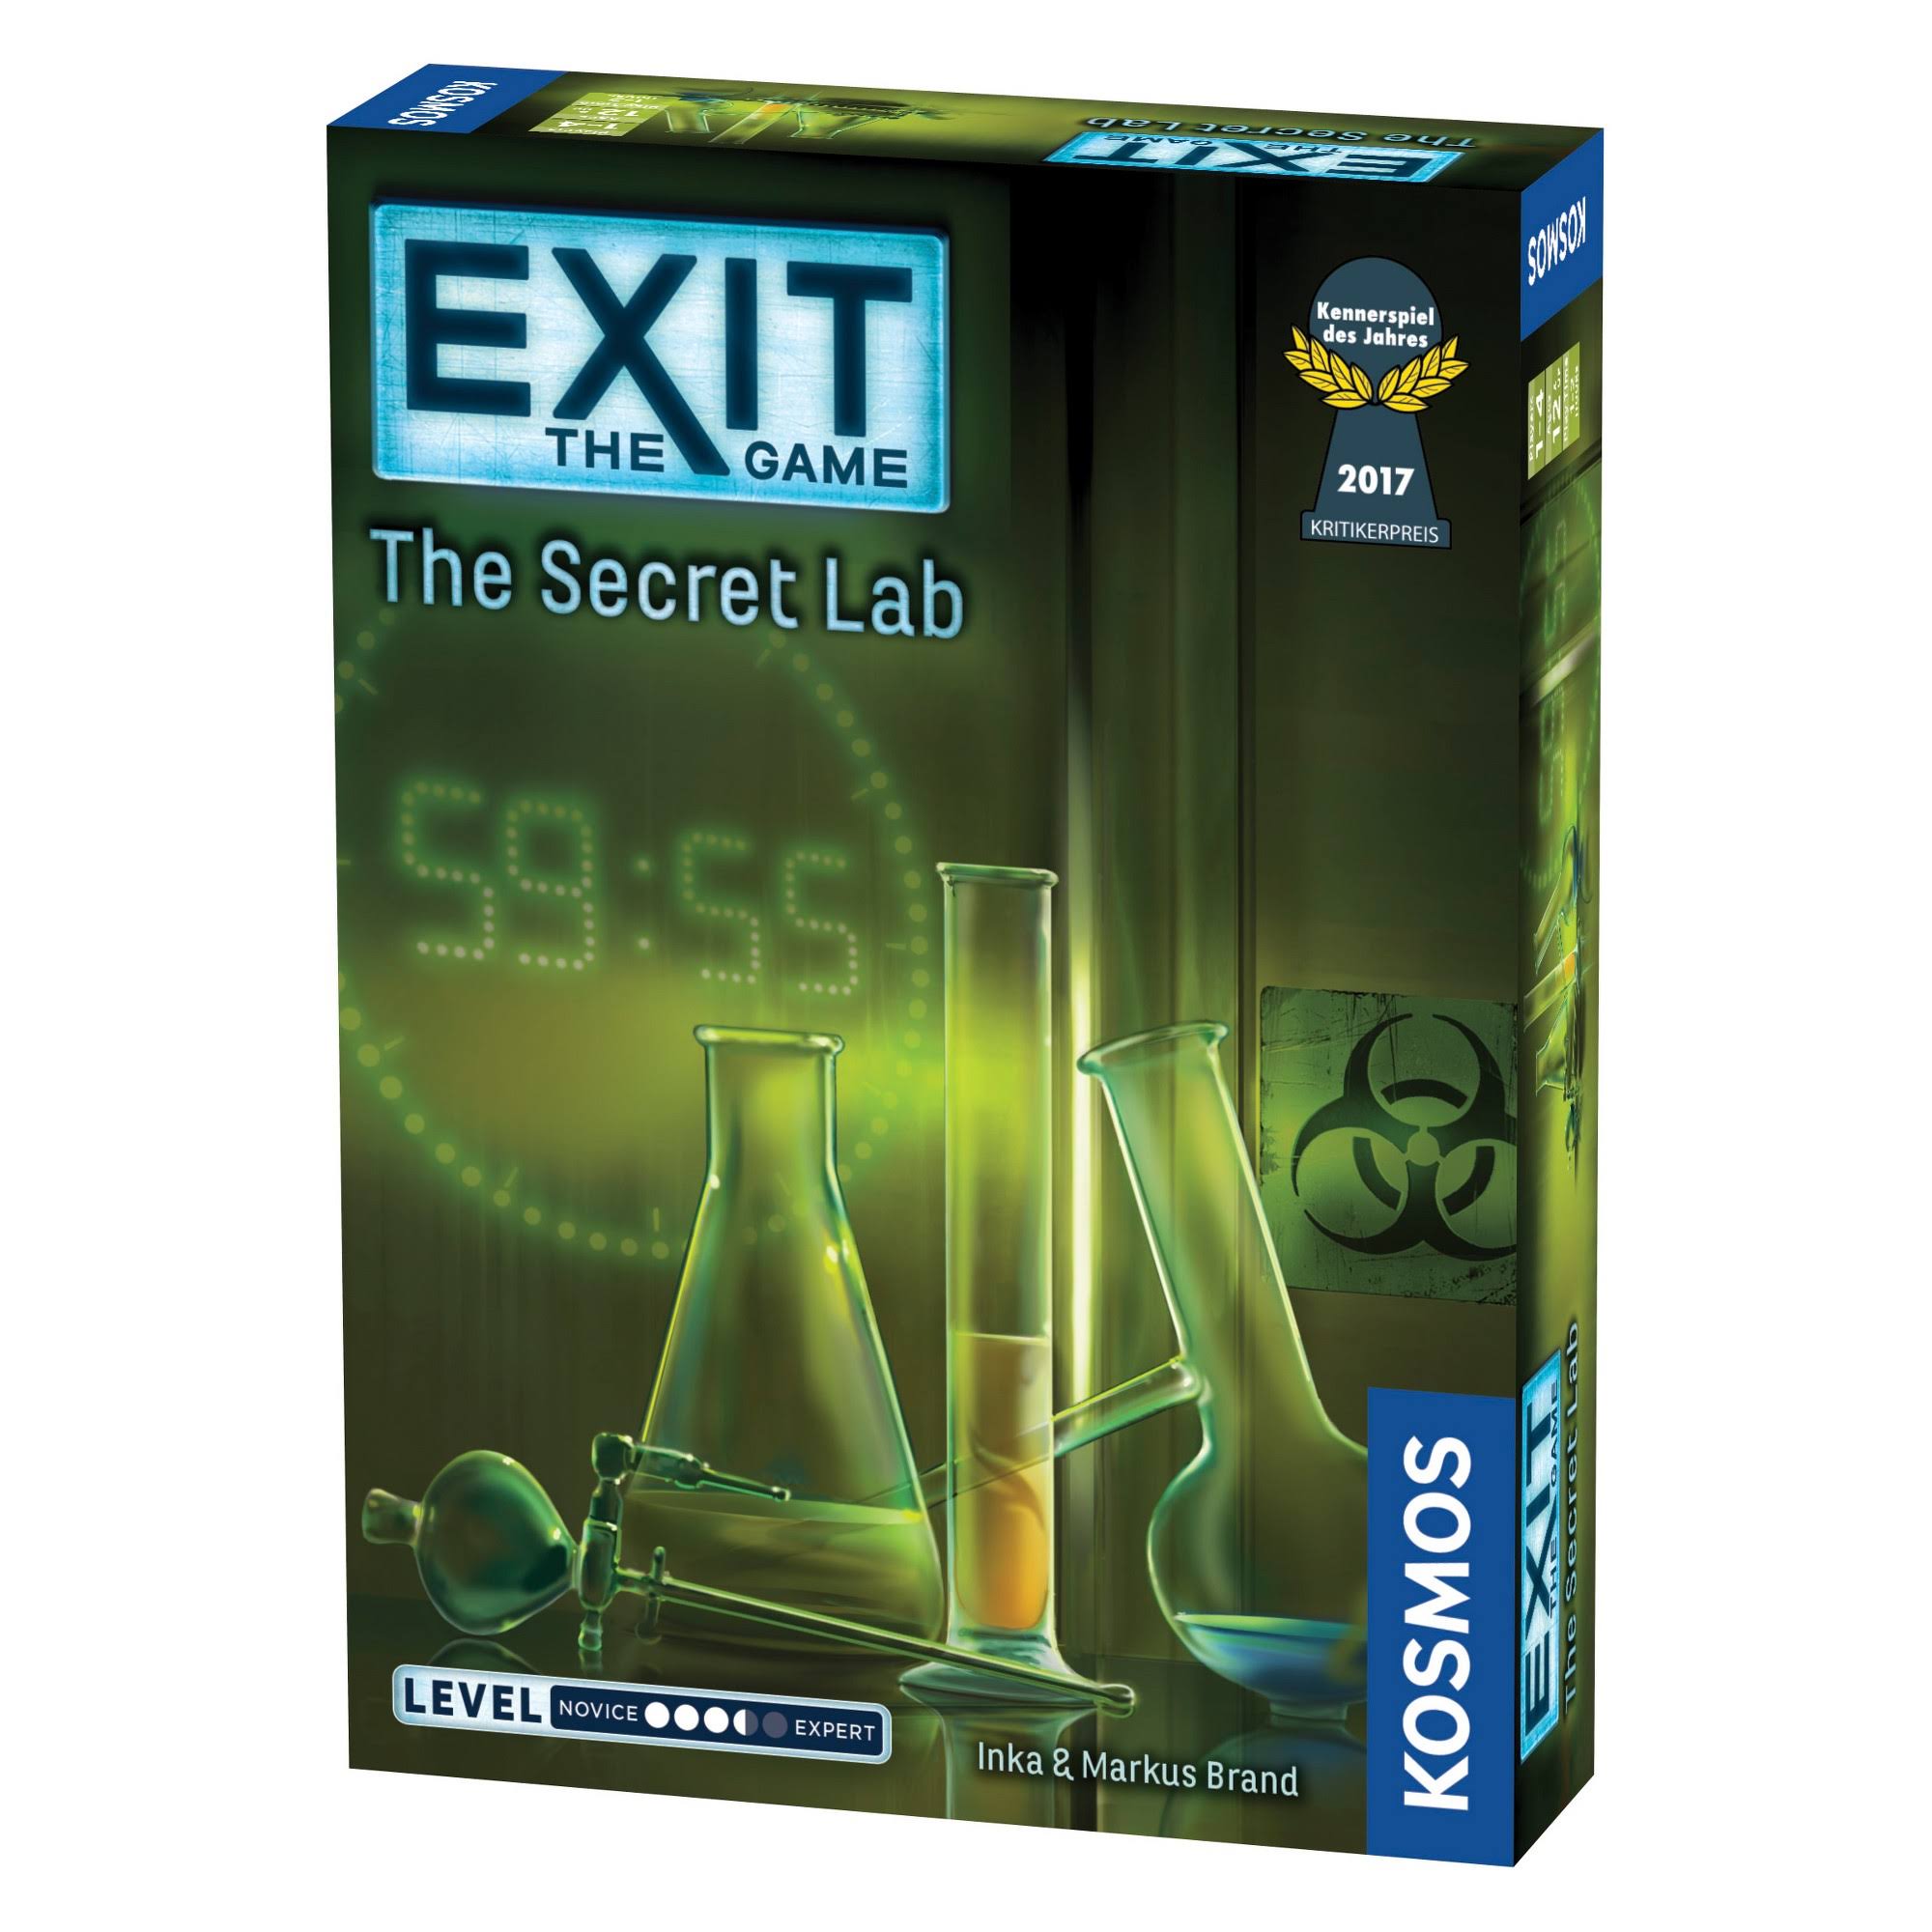 Exit - The Secret Lab Game